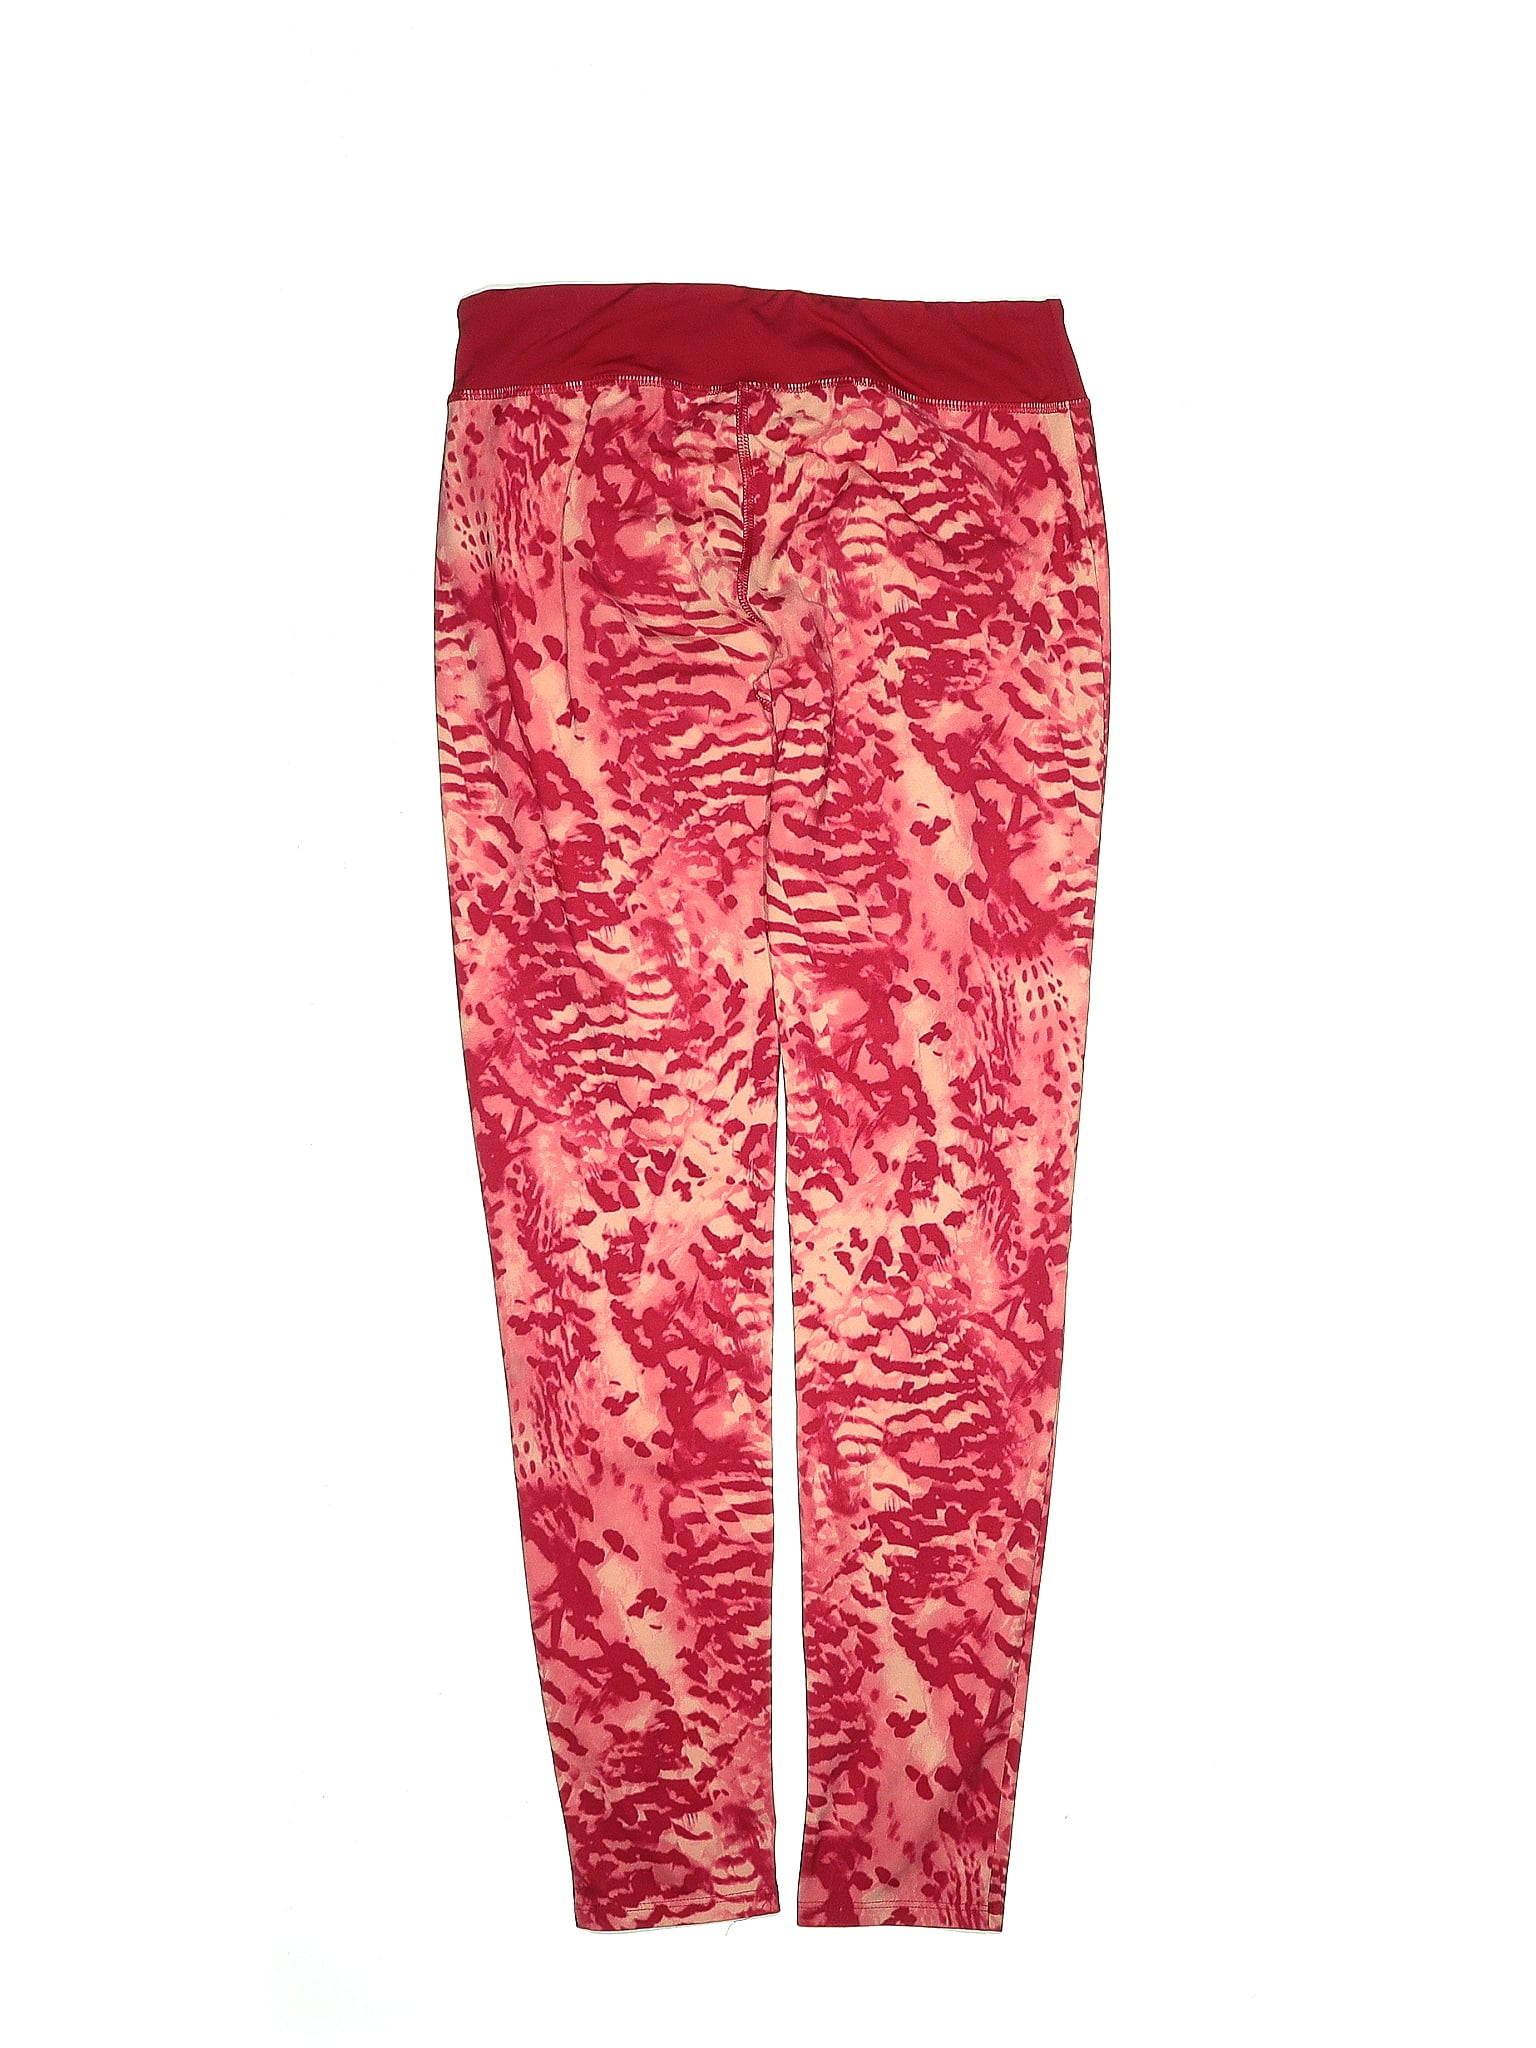 Danskin Multi Color Pink Active Pants Size L - 62% off